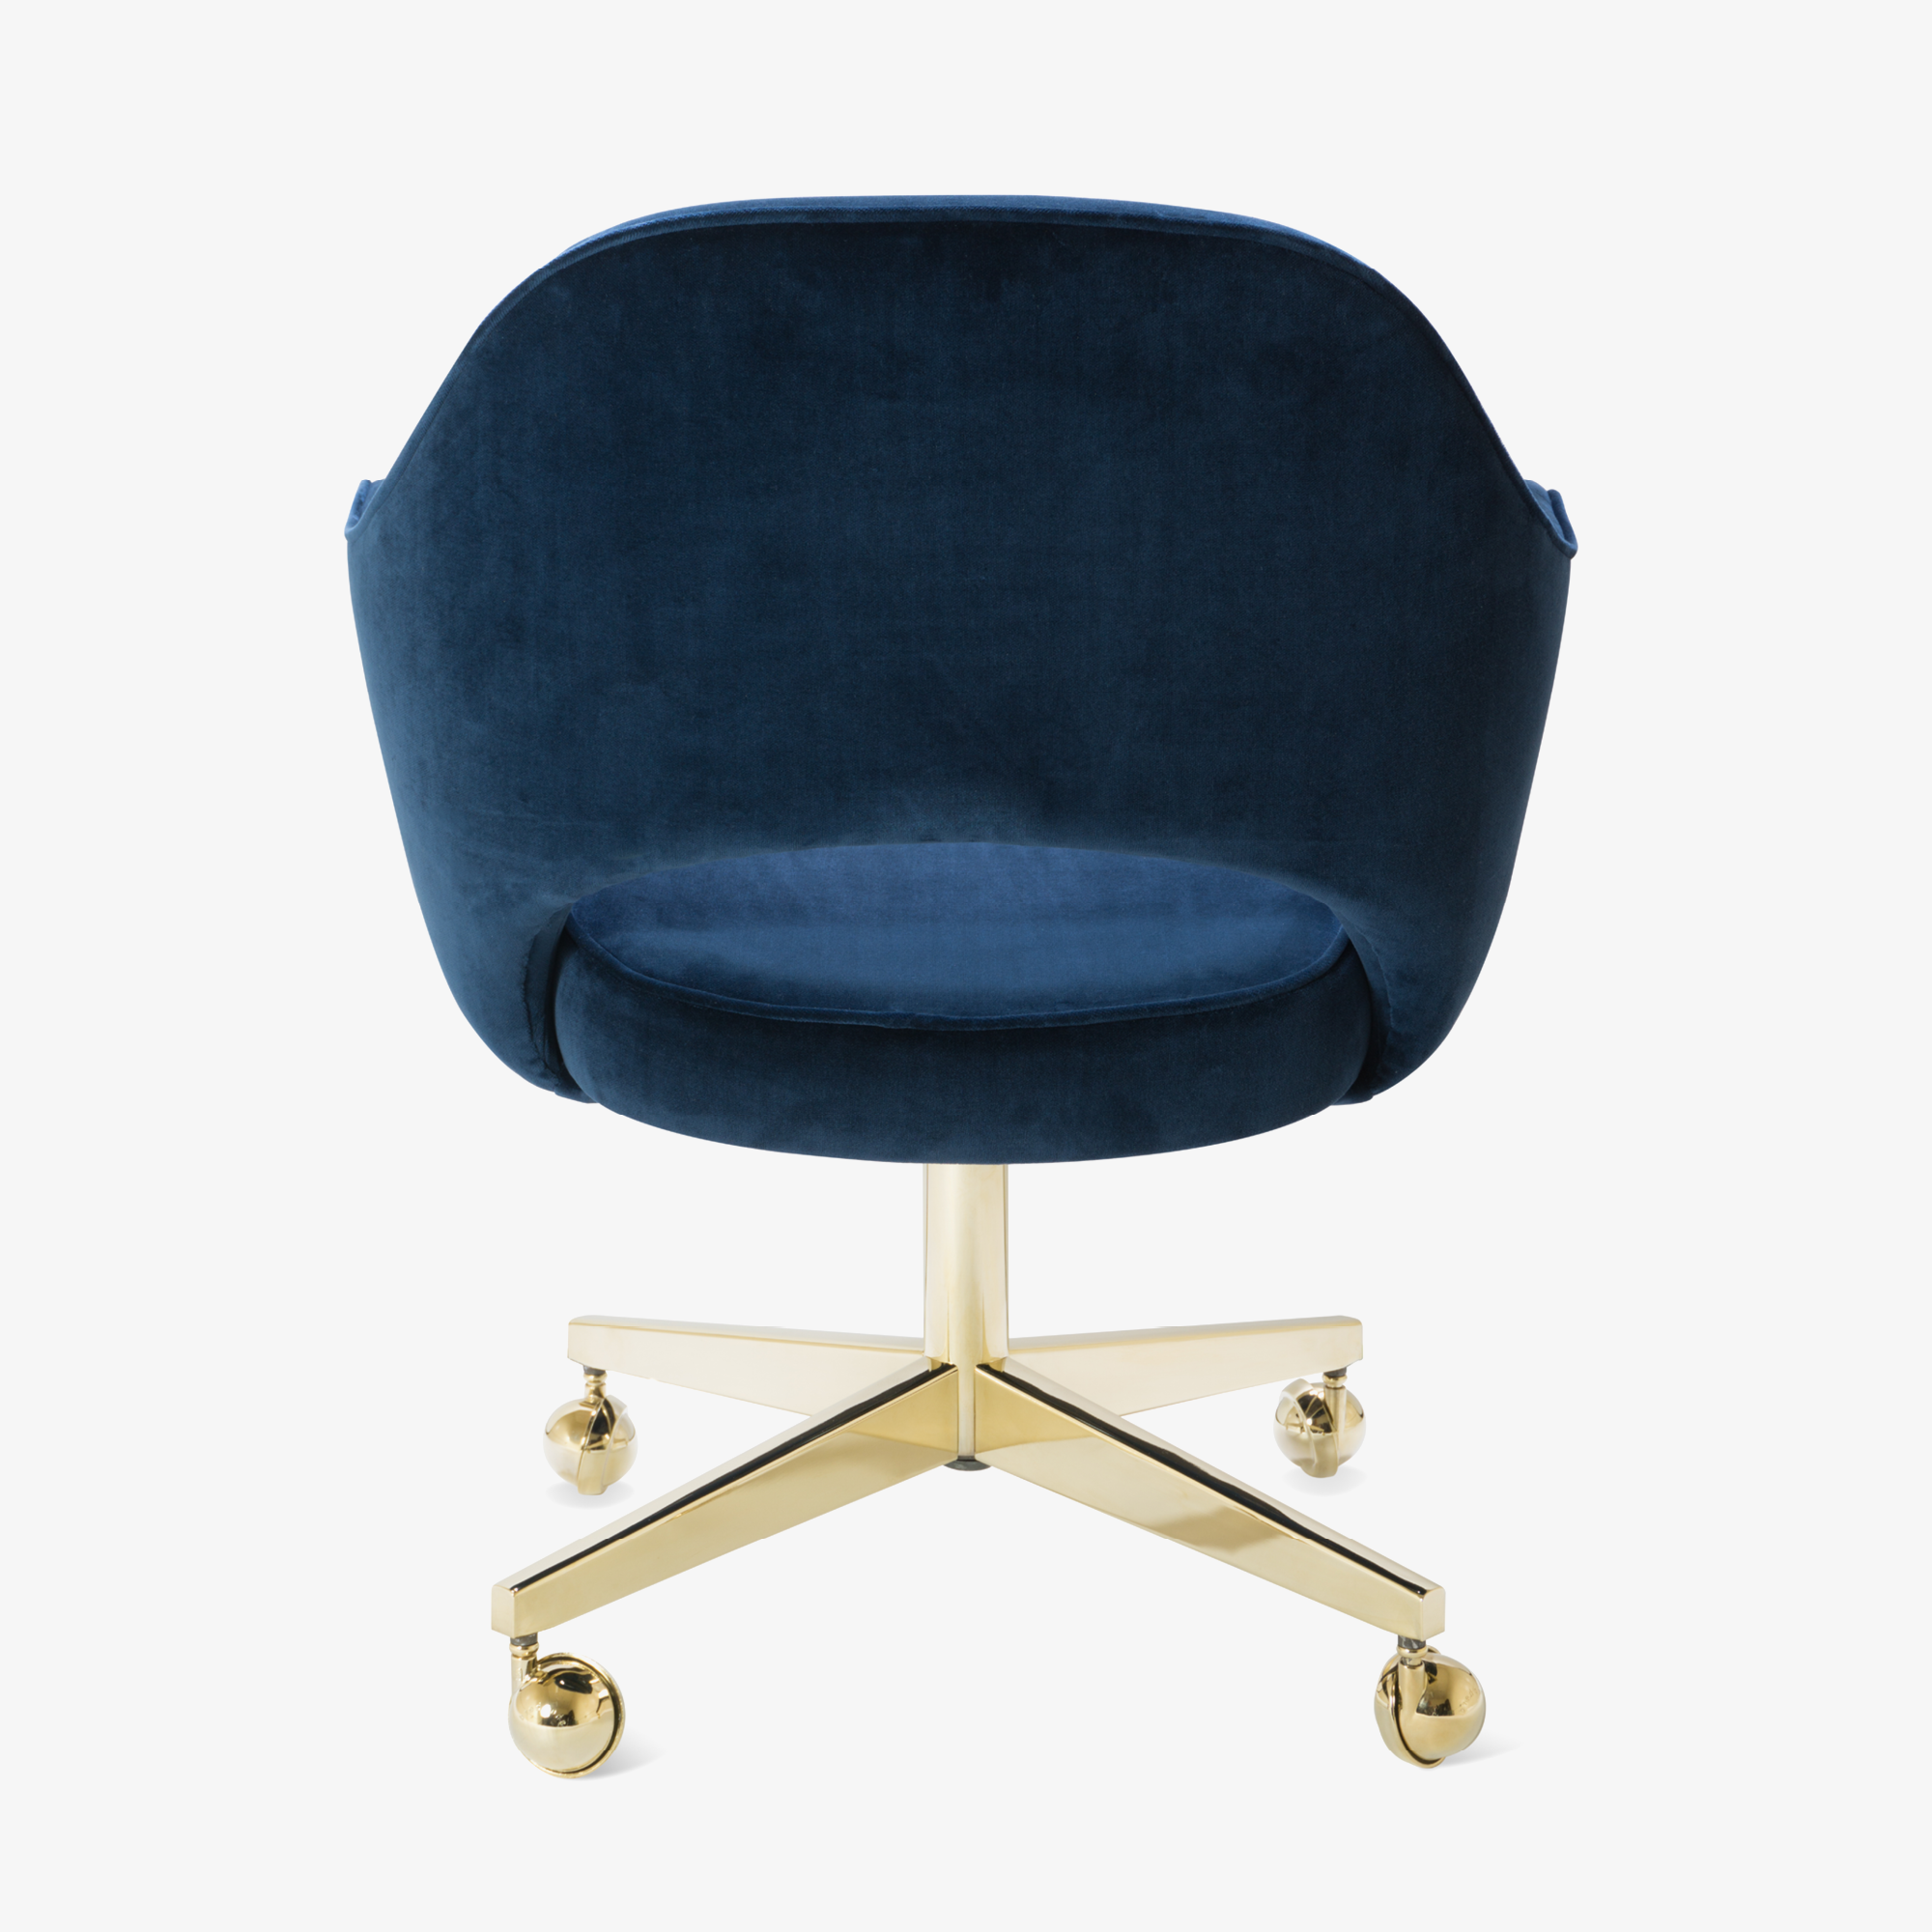 Saarinen Executive Arm Chair in Navy Velvet, Swivel Base, 24k Gold Edition6.png